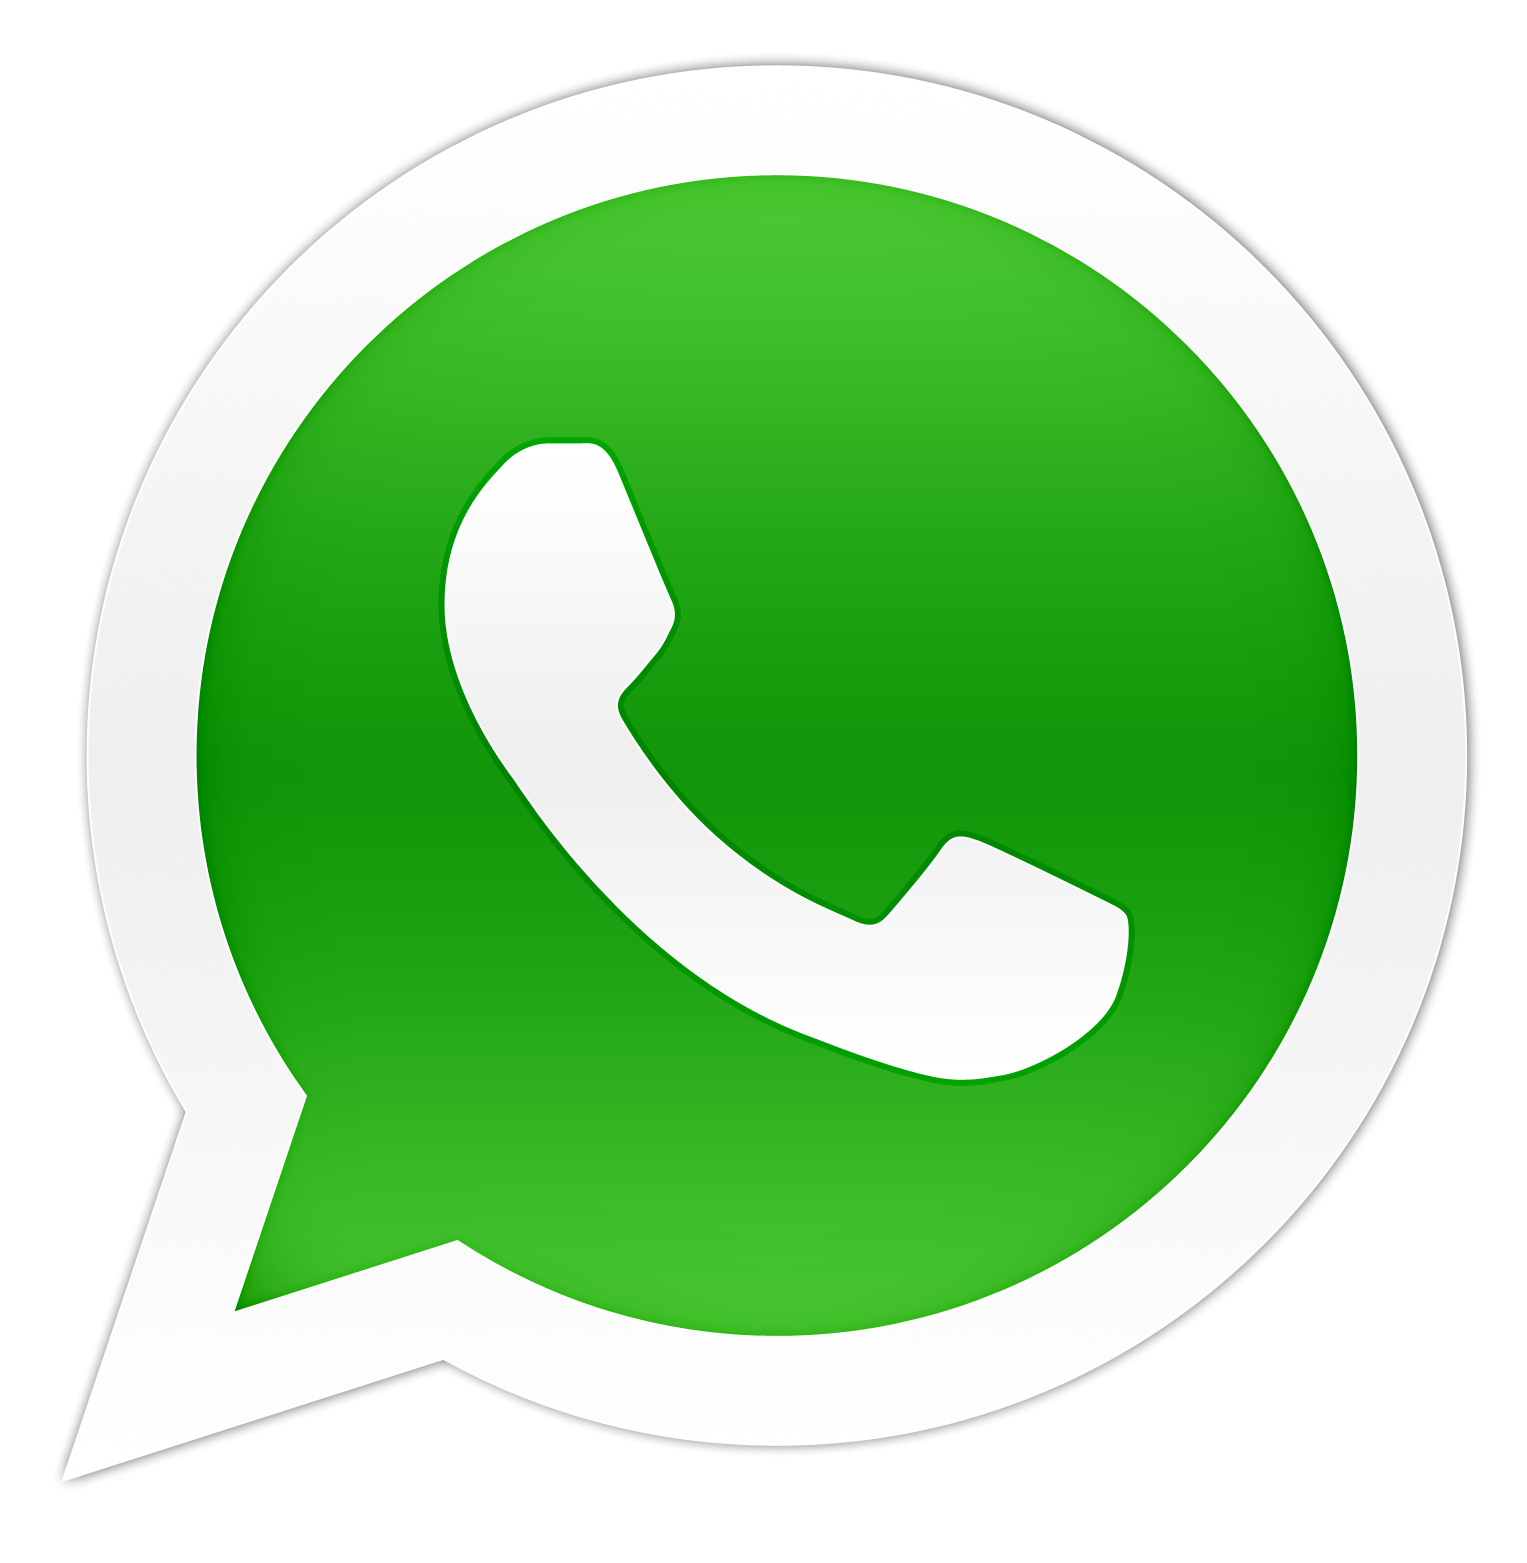 Icone Whatsapp